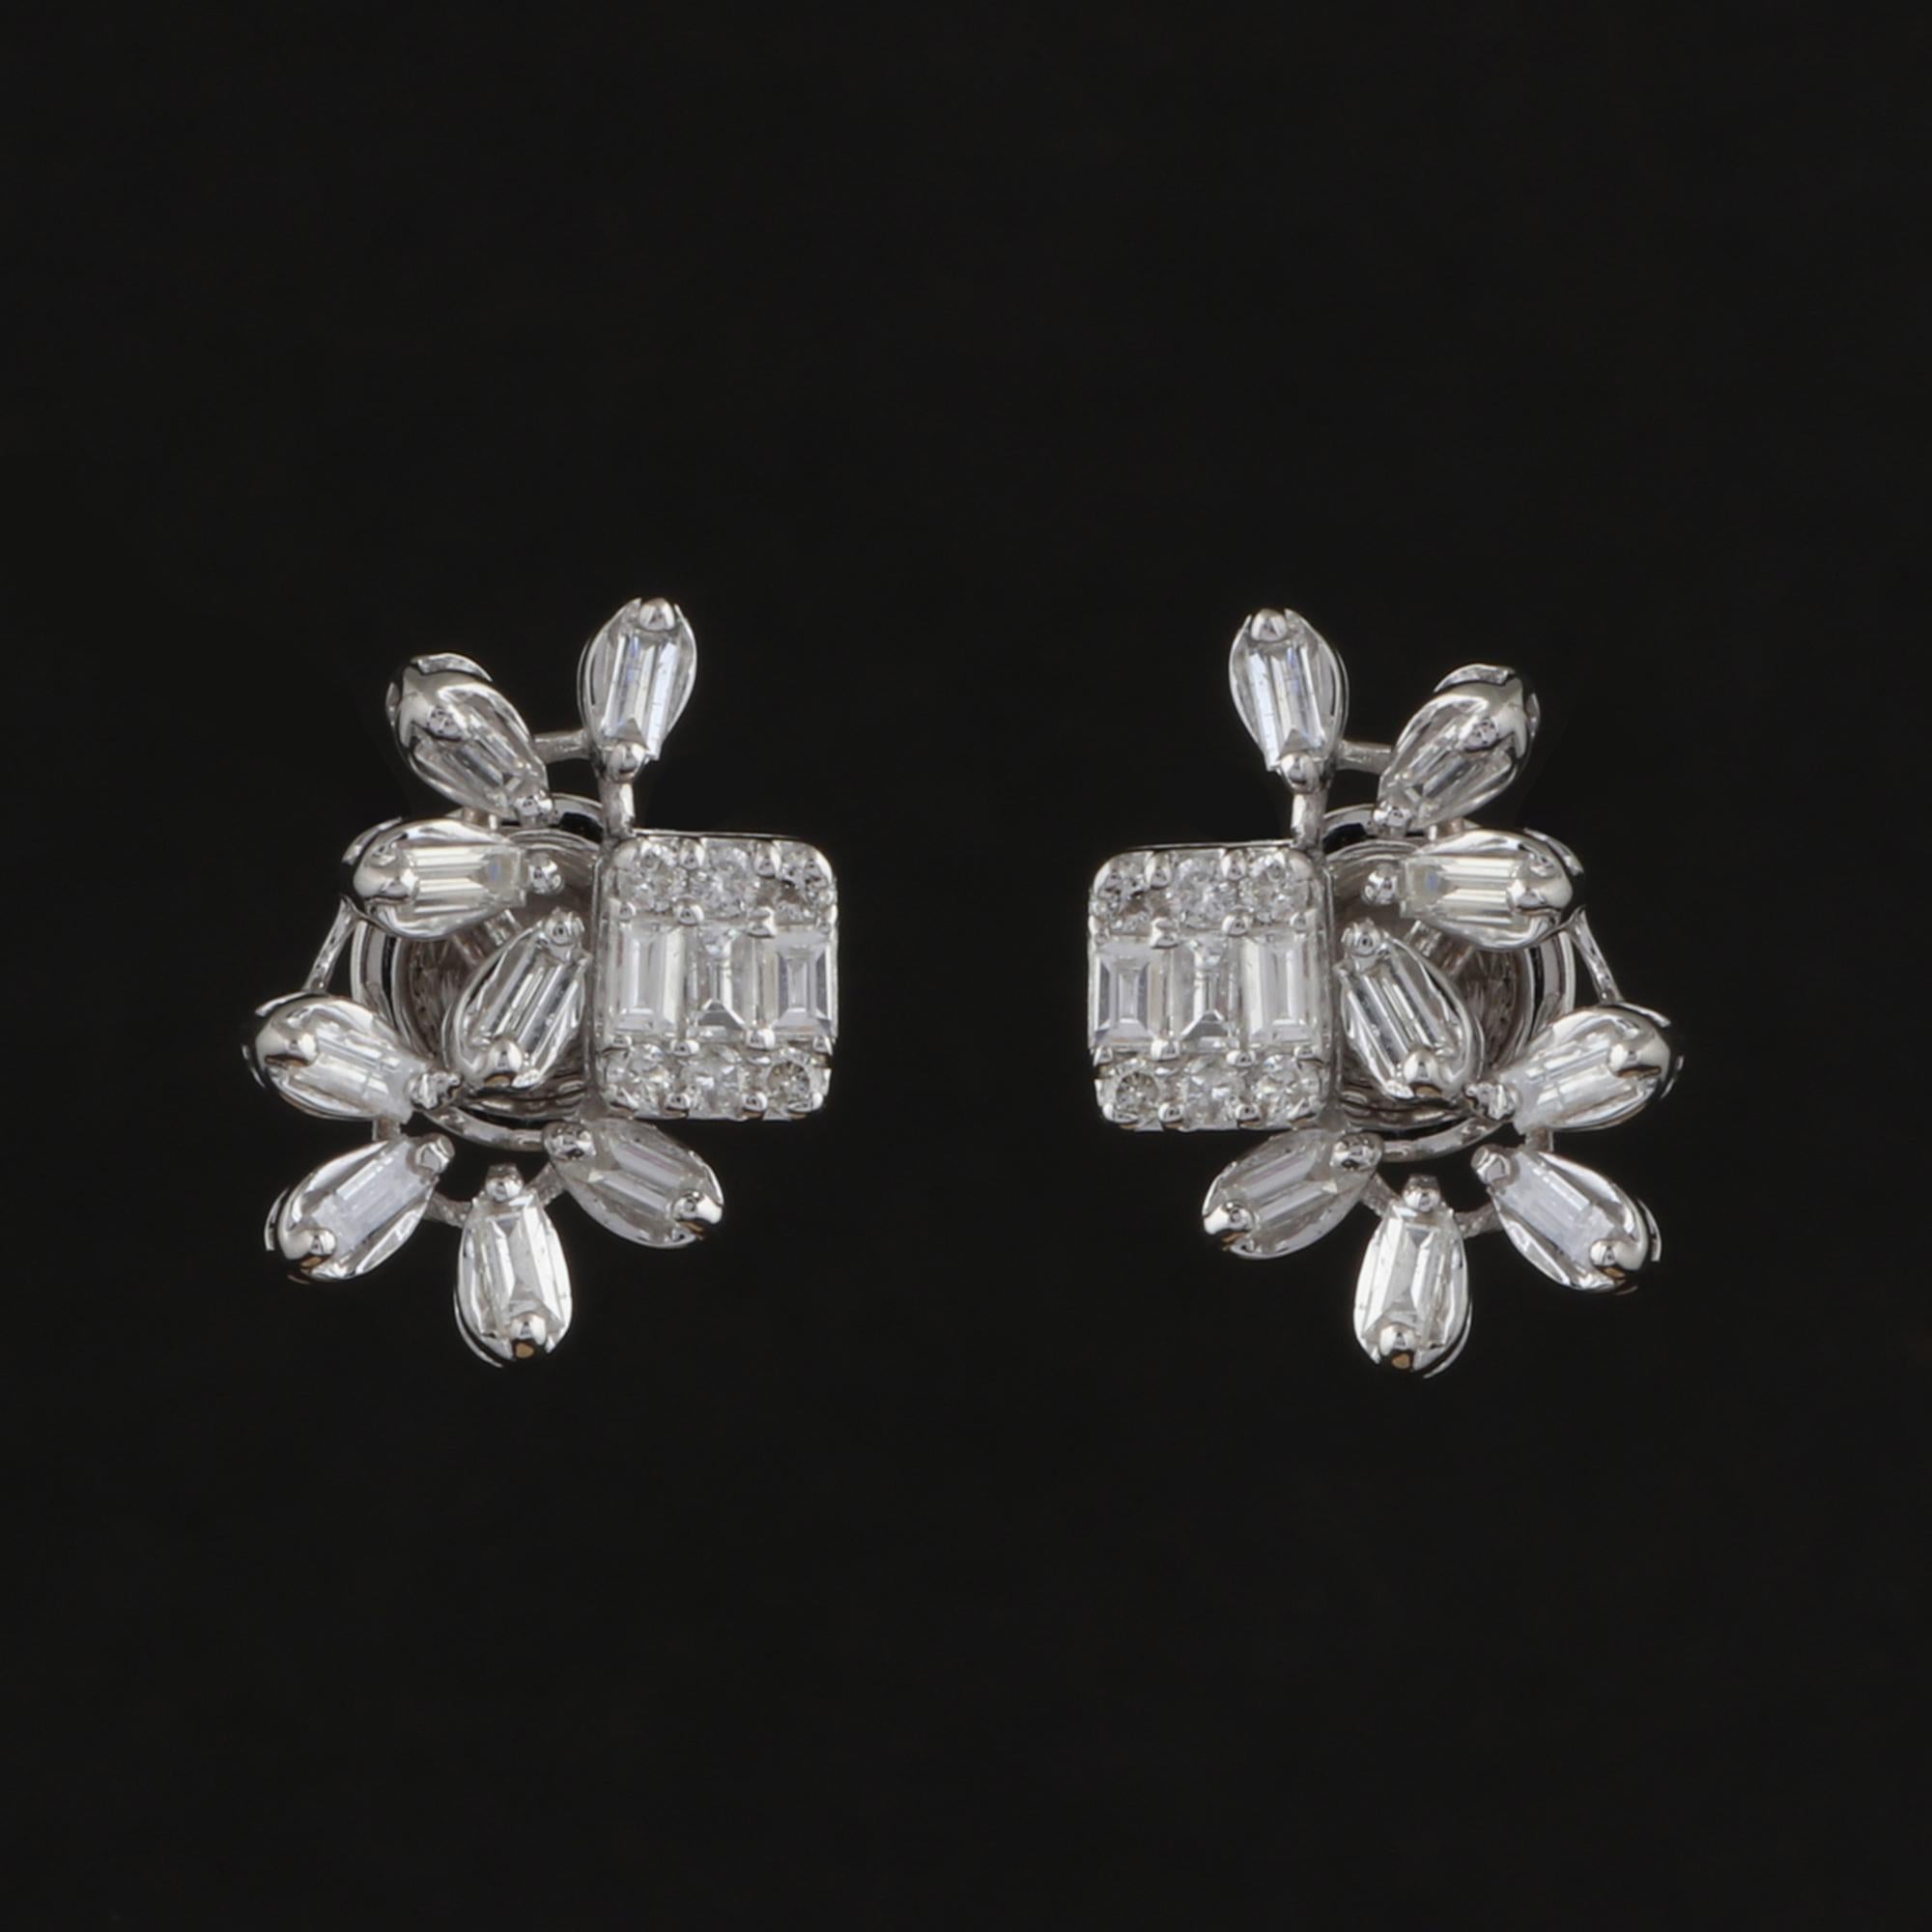 Baguette Cut 0.85 Carat Baguette Diamond Stud Earrings 18 Karat White Gold Handmade Jewelry For Sale